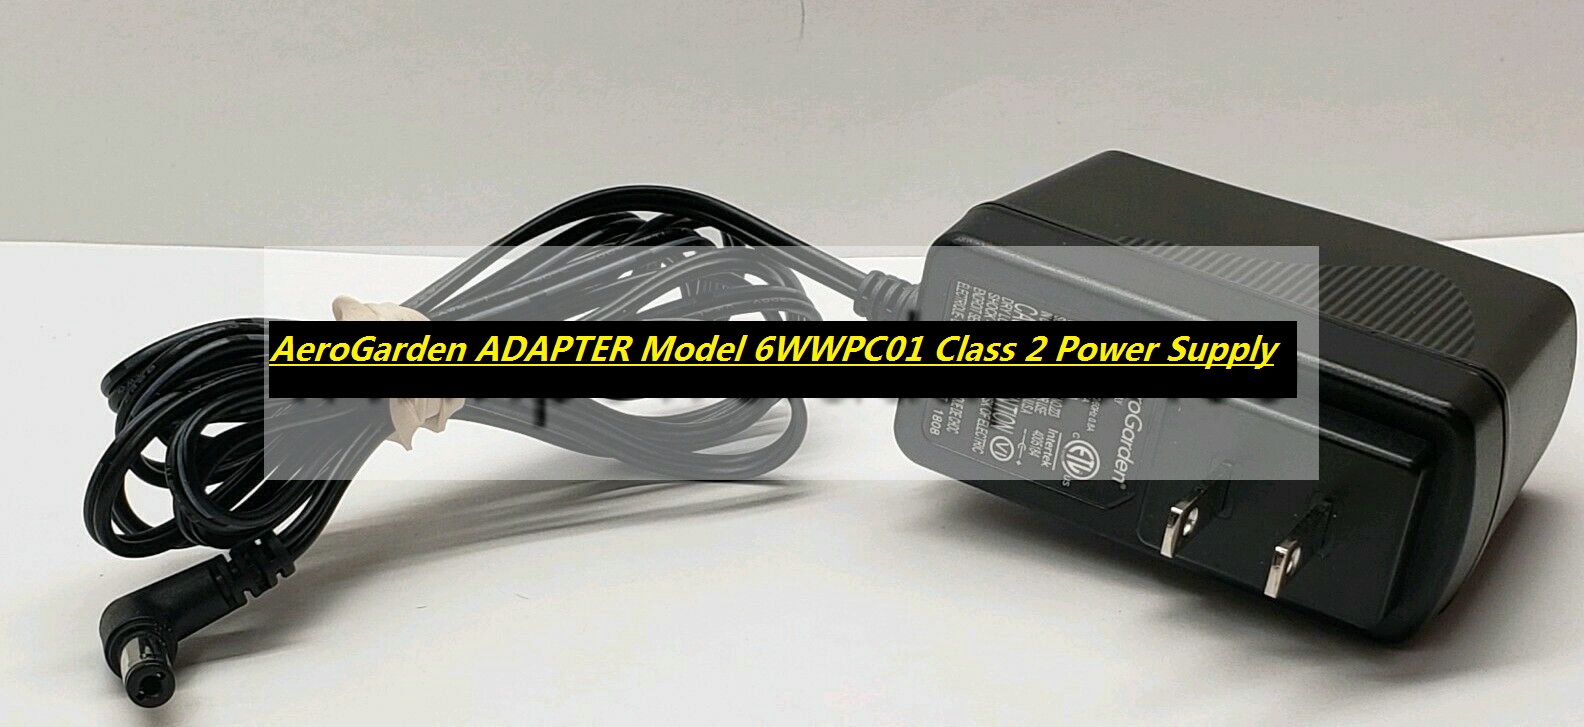 *Brand NEW* AeroGarden Replacement Parts ADAPTER Model 6WWPC01 Class 2 Power Supply